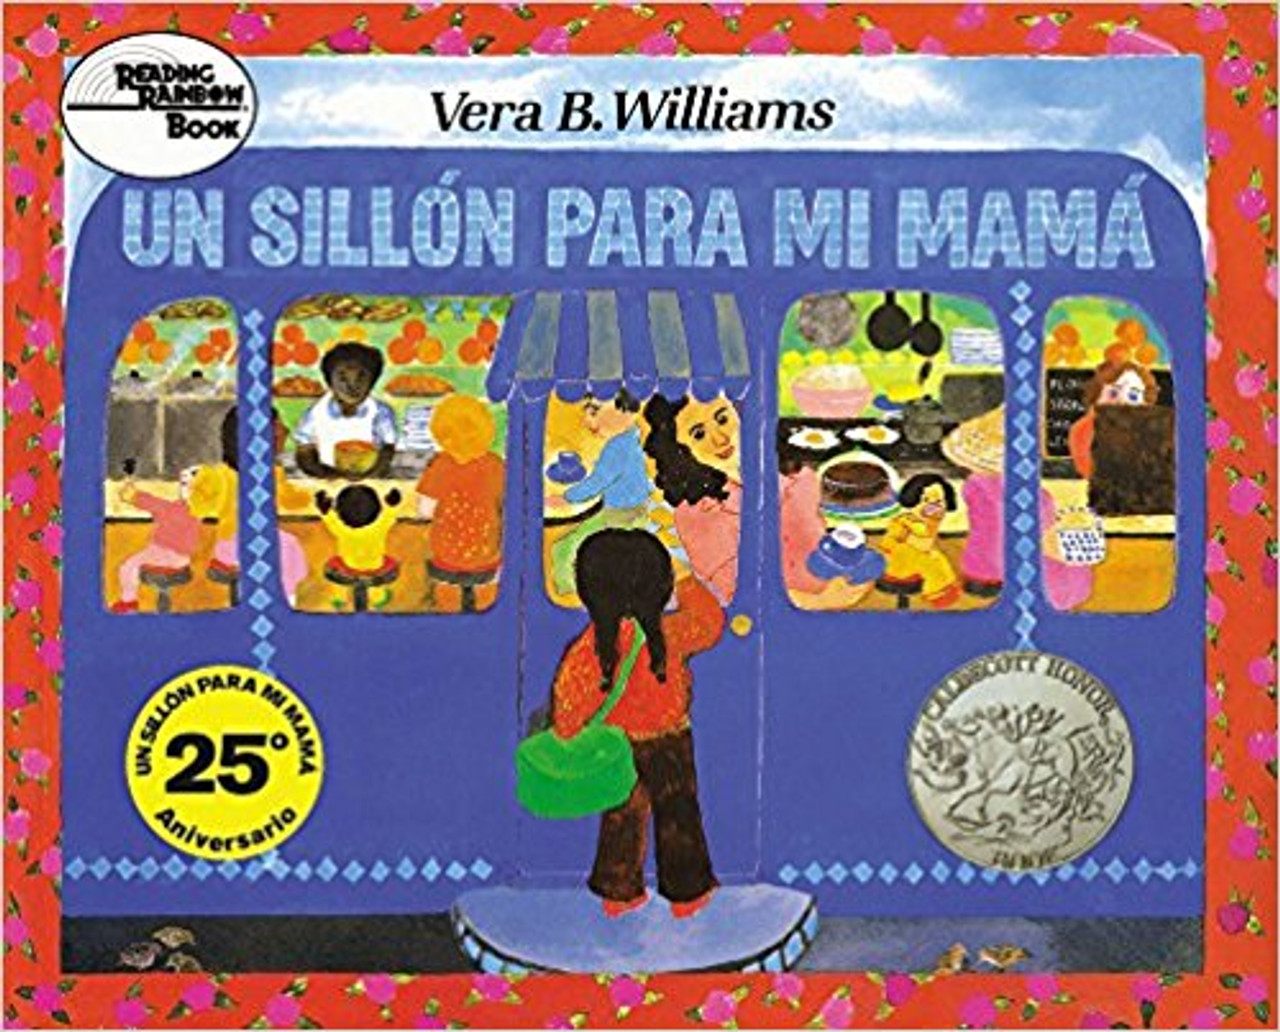 Un Sillon Para Mi Mama (A Chair for My Mother) by Vera B Williams